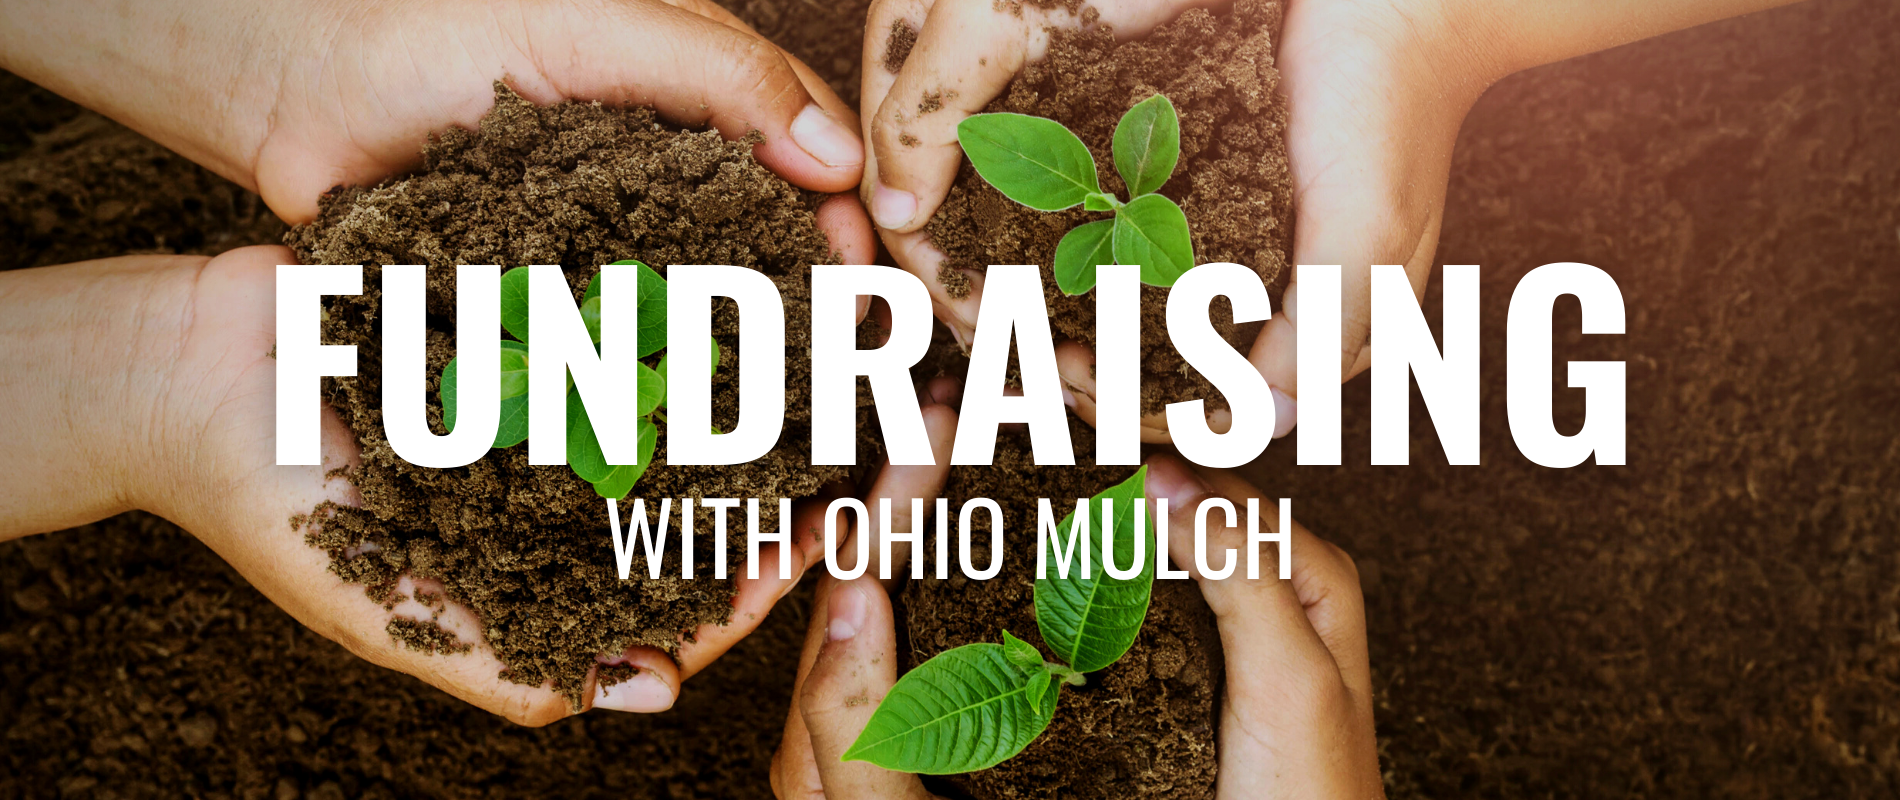 Ohio mulch website banners 2